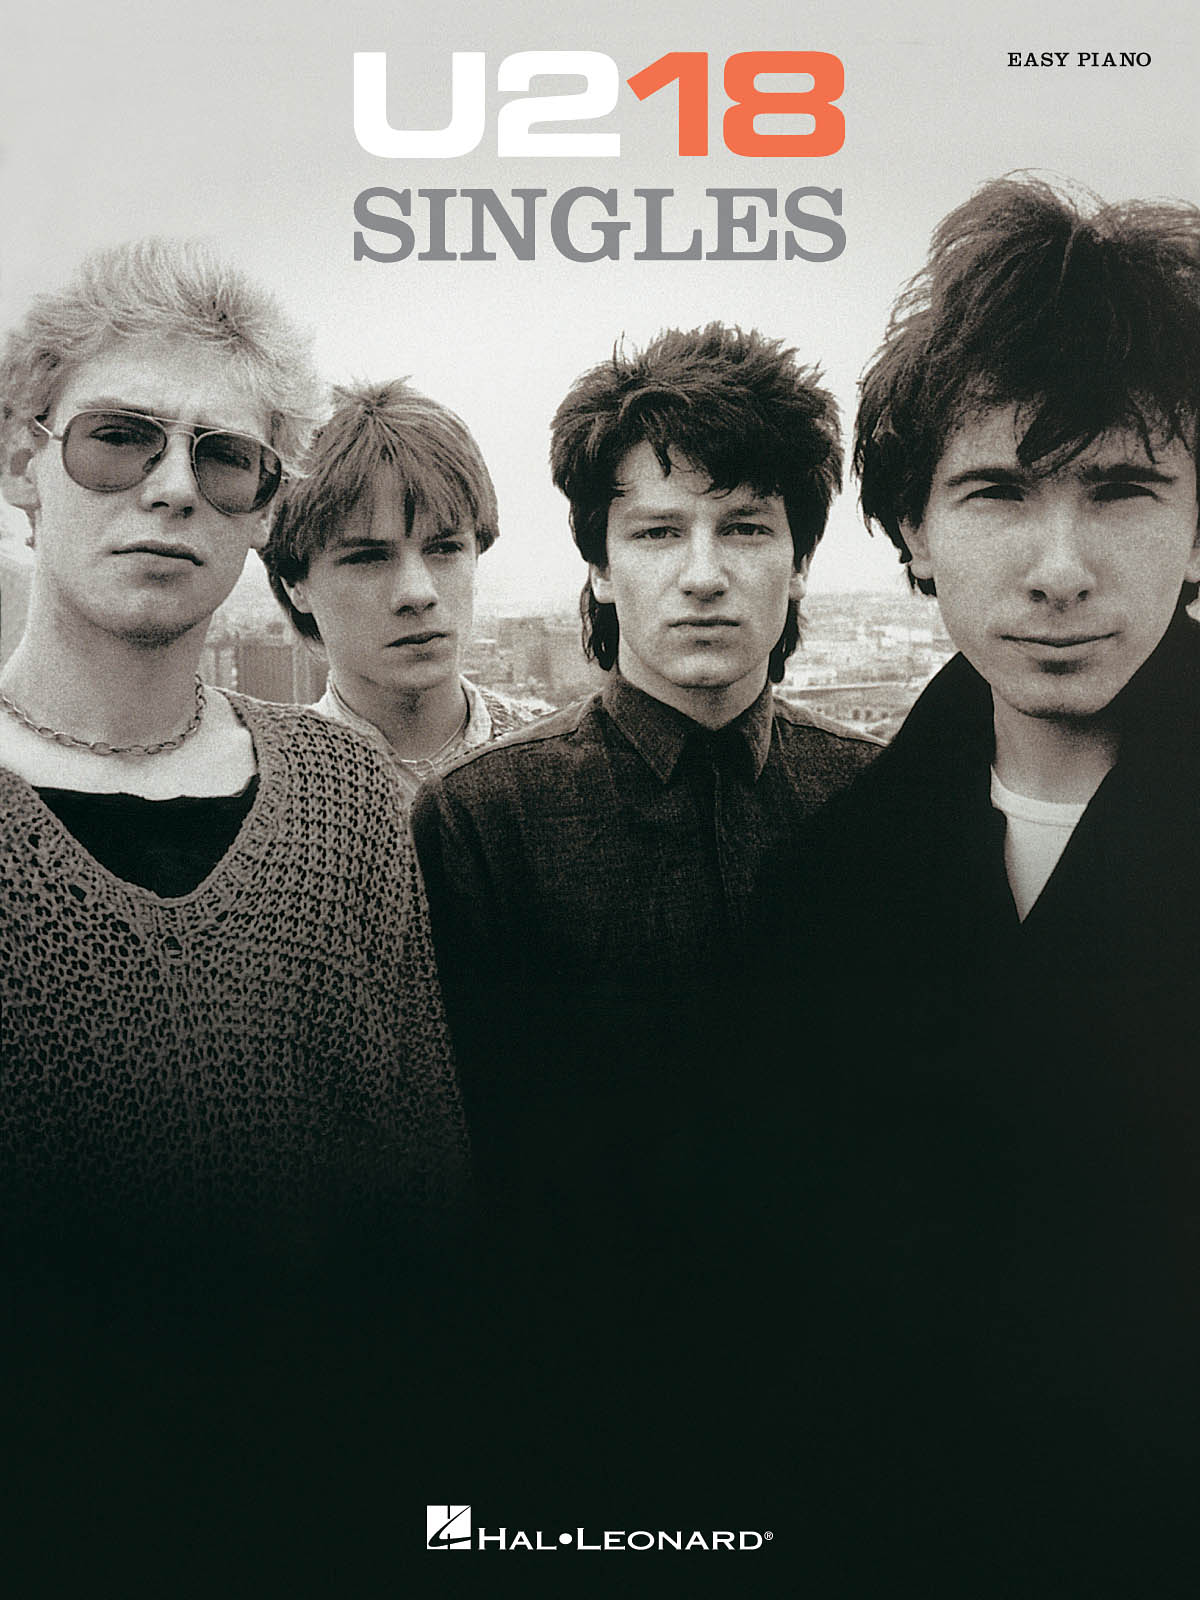 U2: 18 Singles